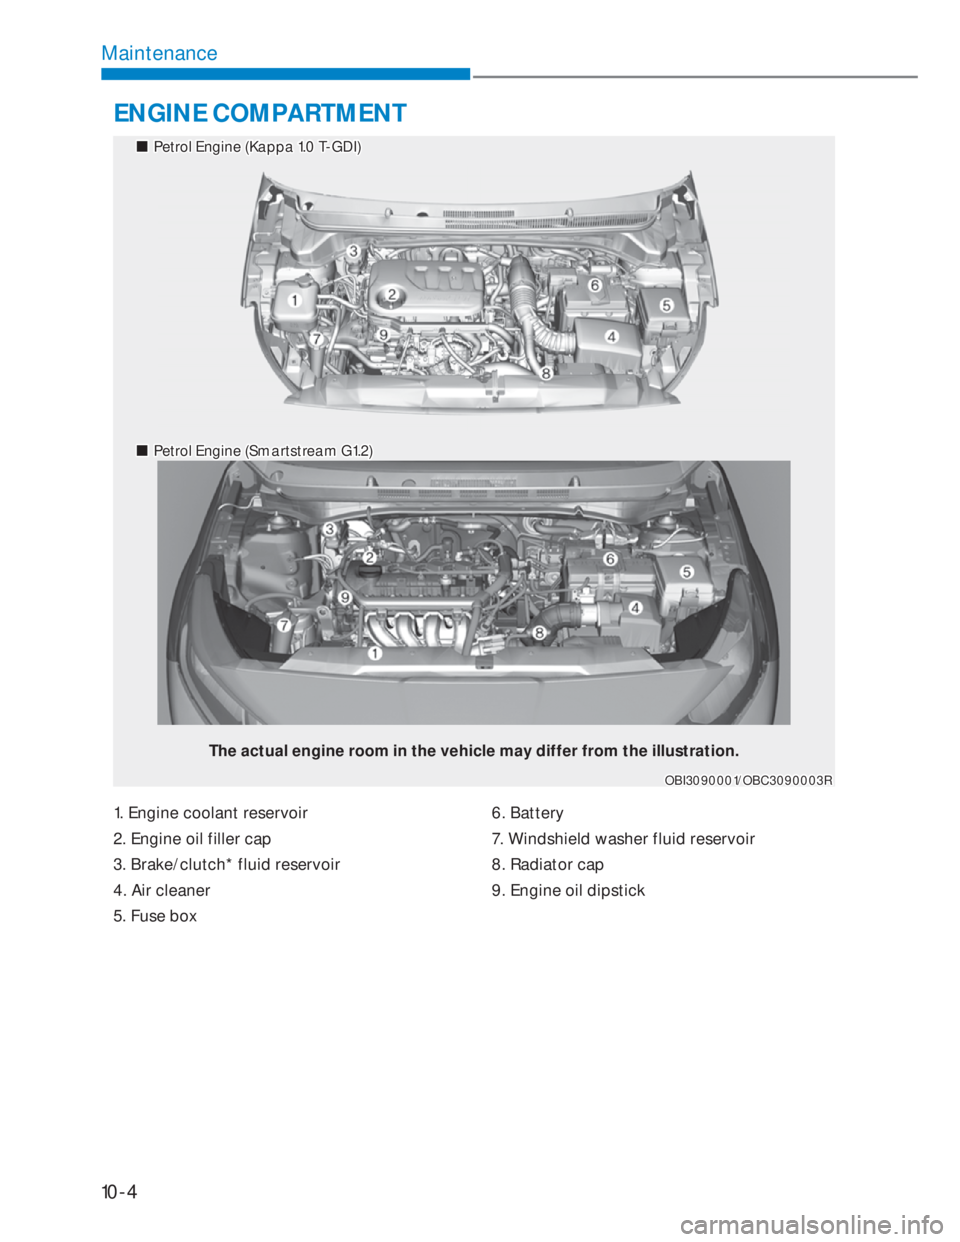 HYUNDAI I20 2021  Owners Manual 10-4
Maintenance
1. Engine coolant reservoir
2. Engine oil filler cap 
3. Brake/clutch* fluid reservoir 
4. Air cleaner 
5. Fuse box 6. Battery 
7. Windshield washer fluid reservoir 
8. Radiator cap
9